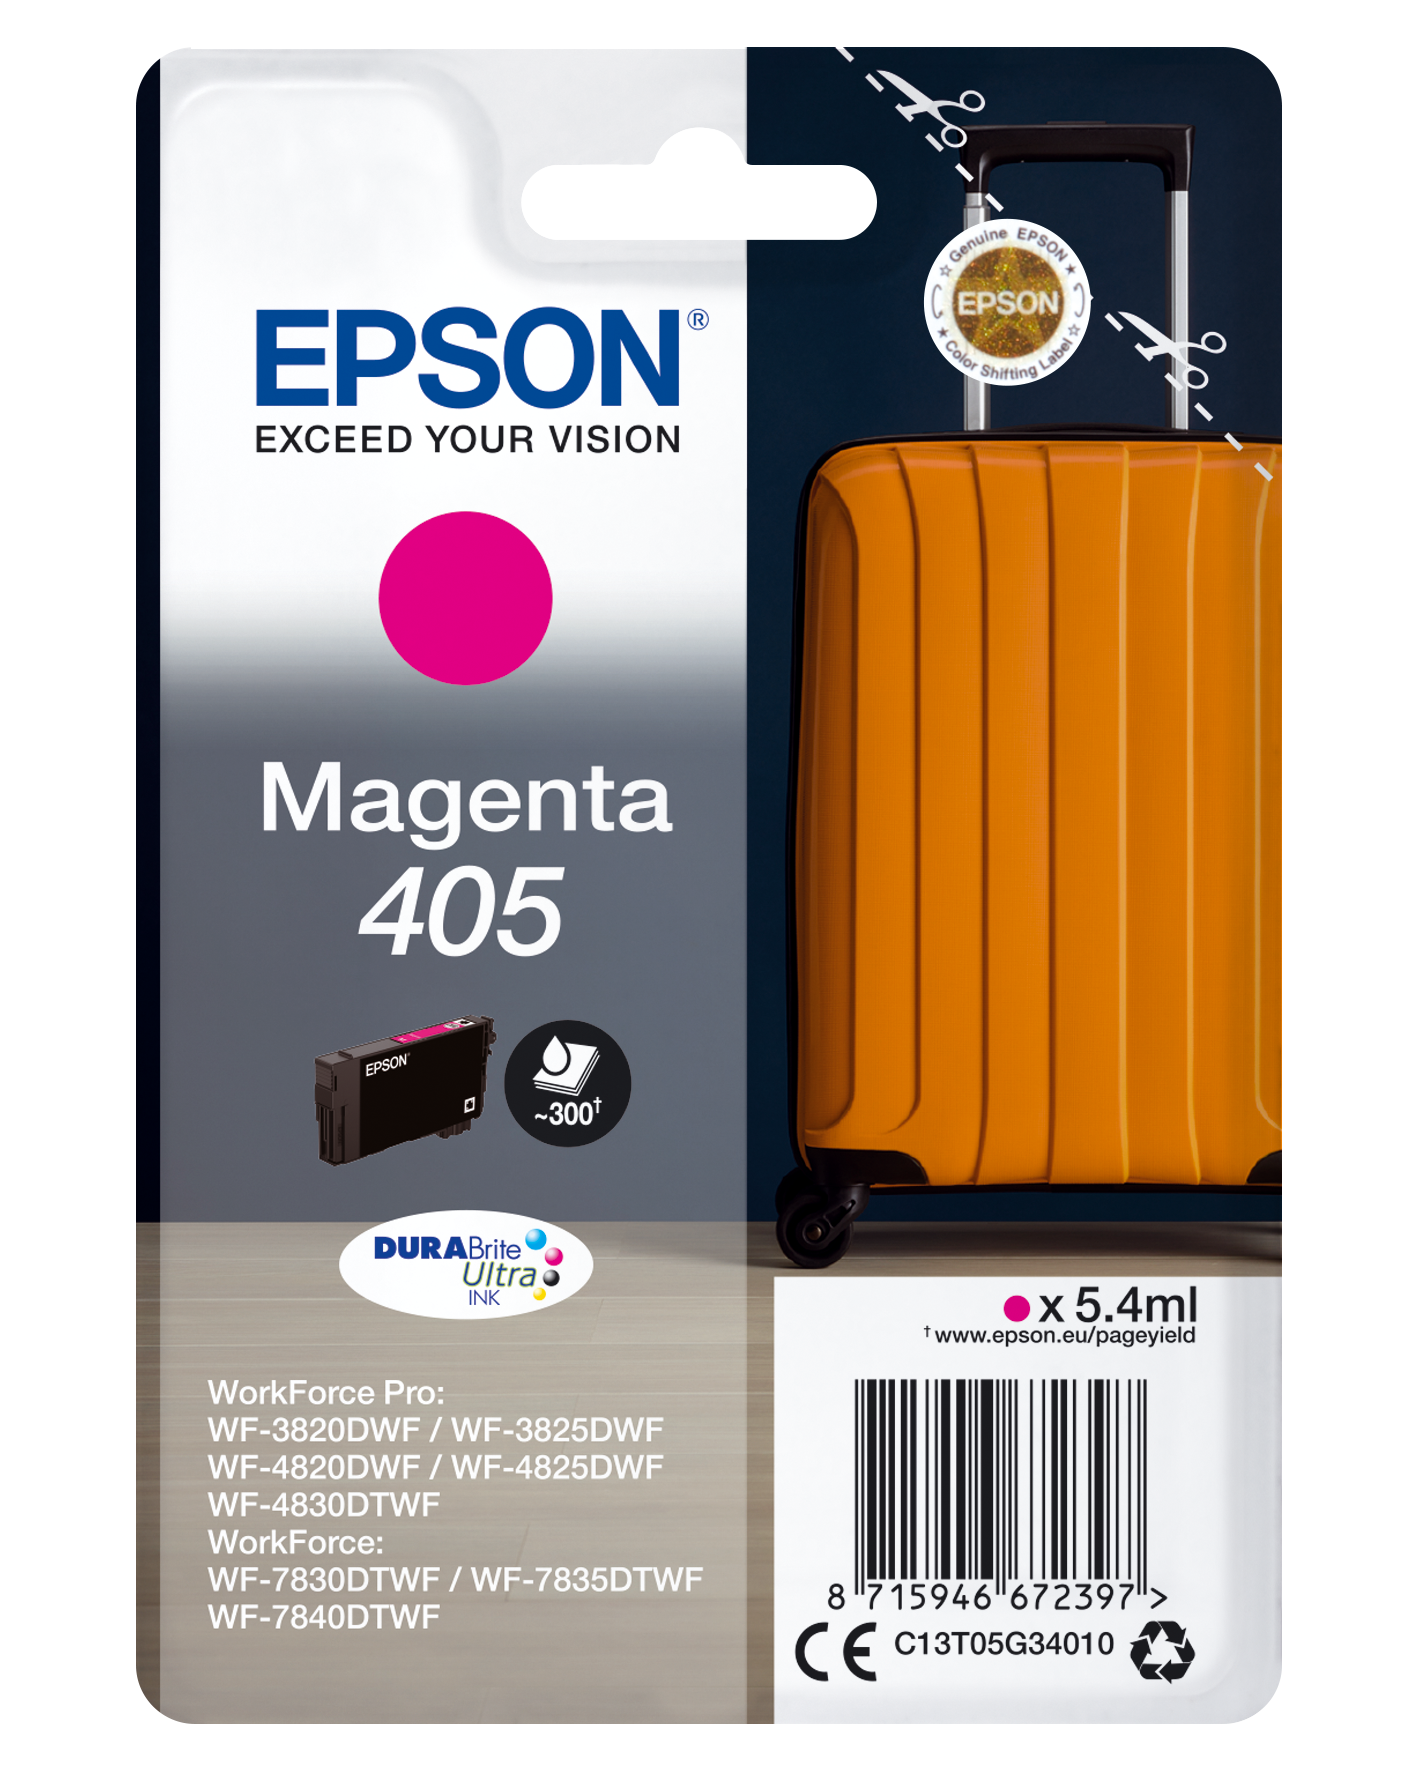 Epson Singlepack Magenta 405 DURABrite Ultra Ink single pack / magenta